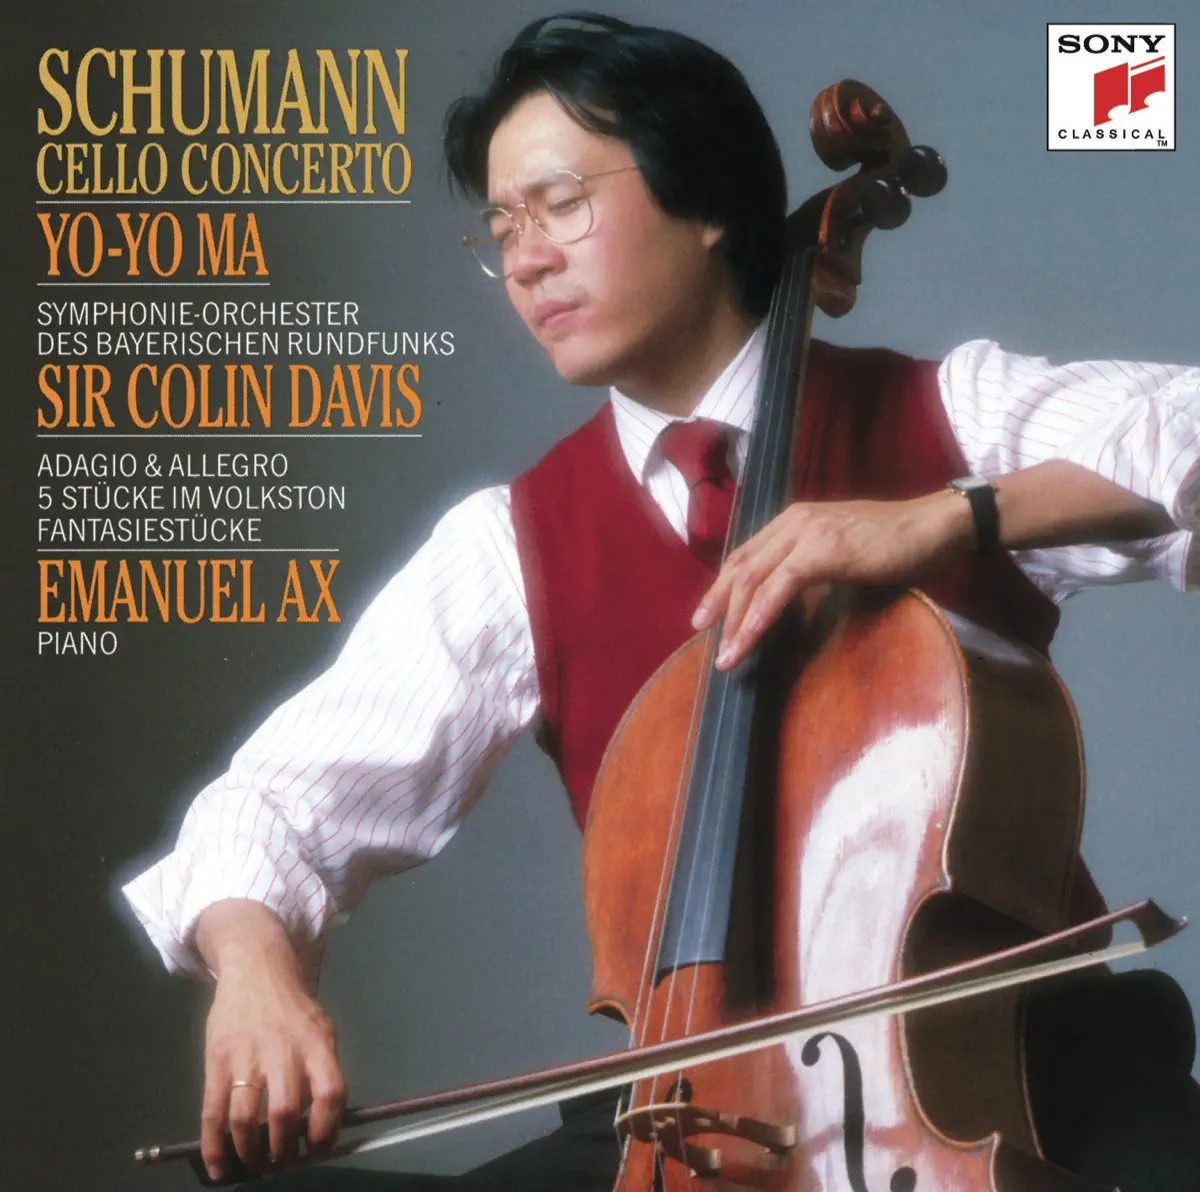 馬友友 Yo-Yo Ma - Schumann Cello Concerto, Adagio & Allegro, Fantasiestücke (1988) [iTunes Plus AAC M4A]-新房子